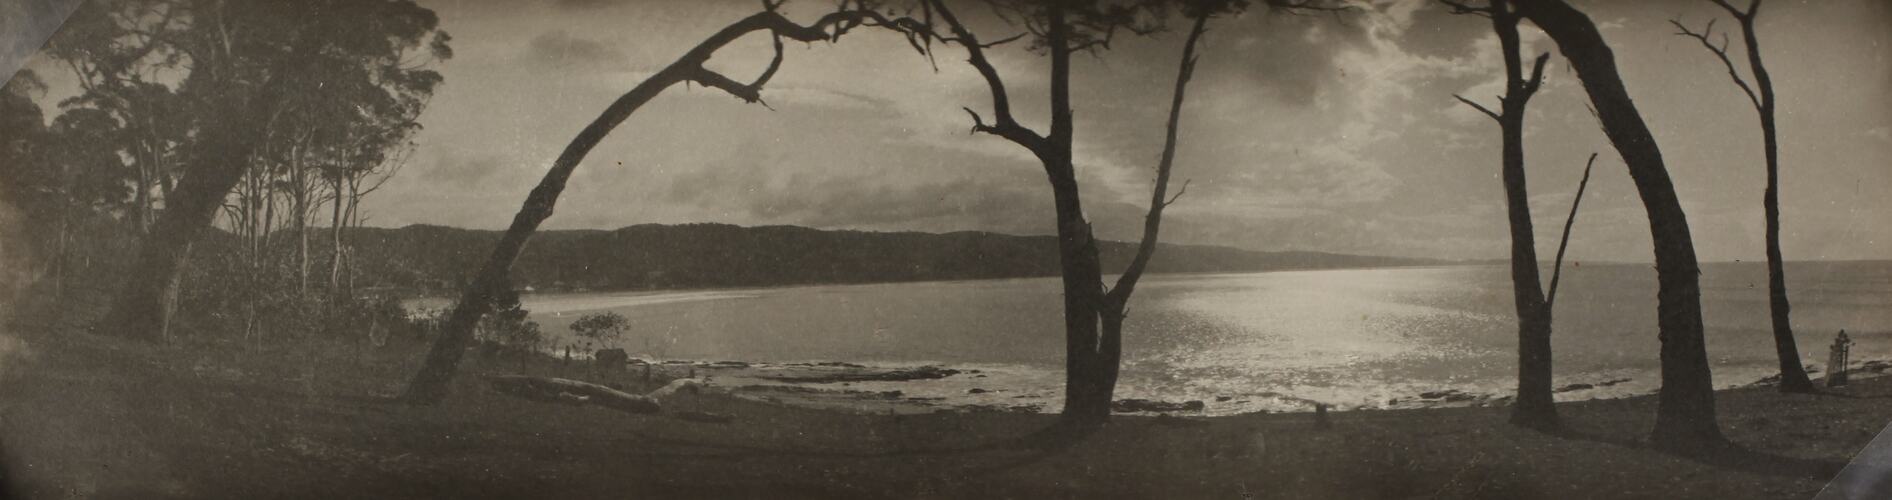 Photograph - Coastal Landscape, Lorne District, Victoria, circa 1920s